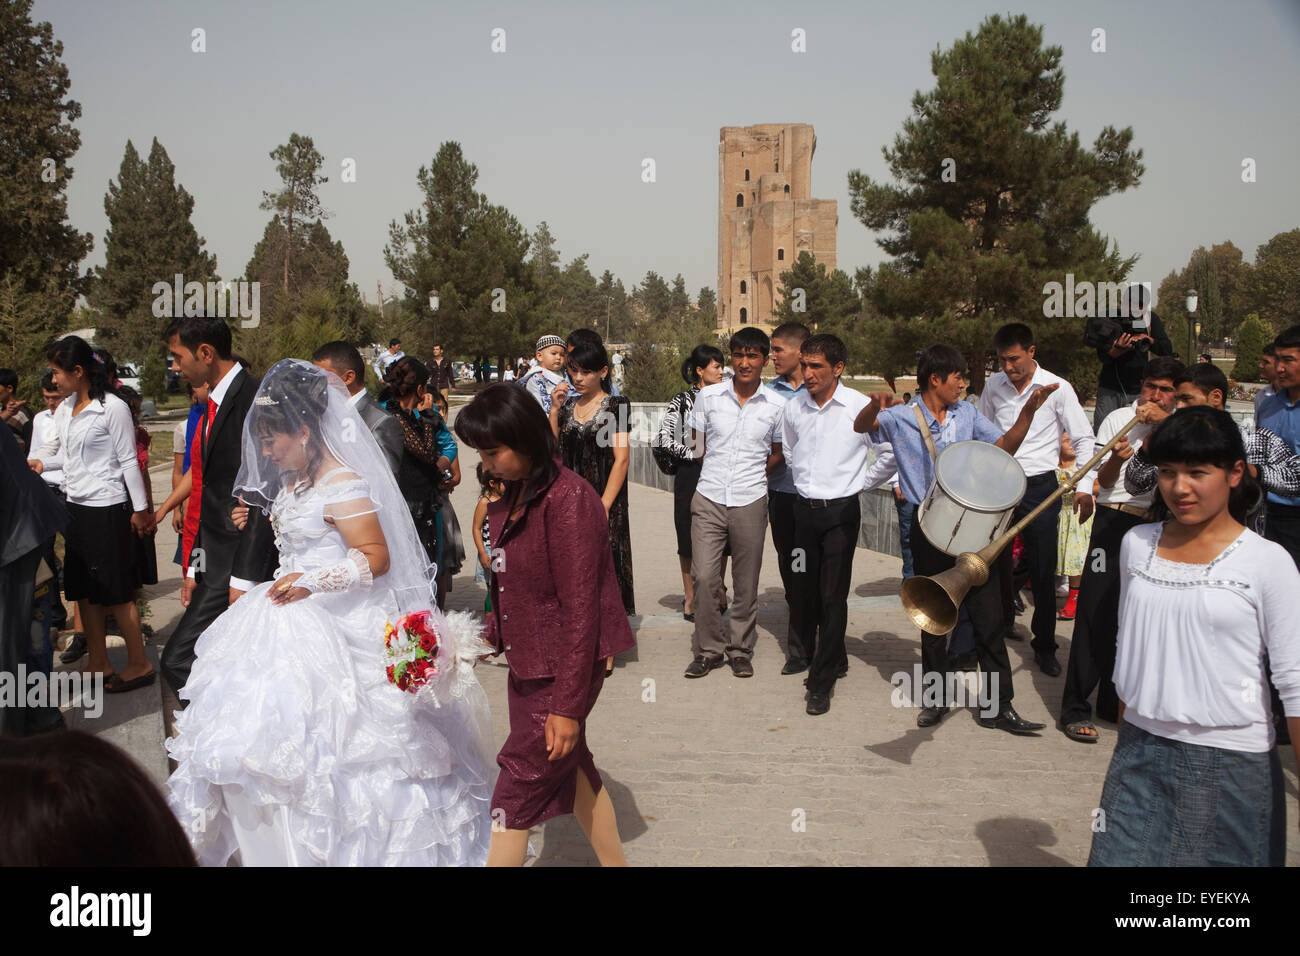 Hochzeit-Gruppe im Schlossgarten, Ak Sarai Palast; Shakhrisabz, Usbekistan Stockfoto